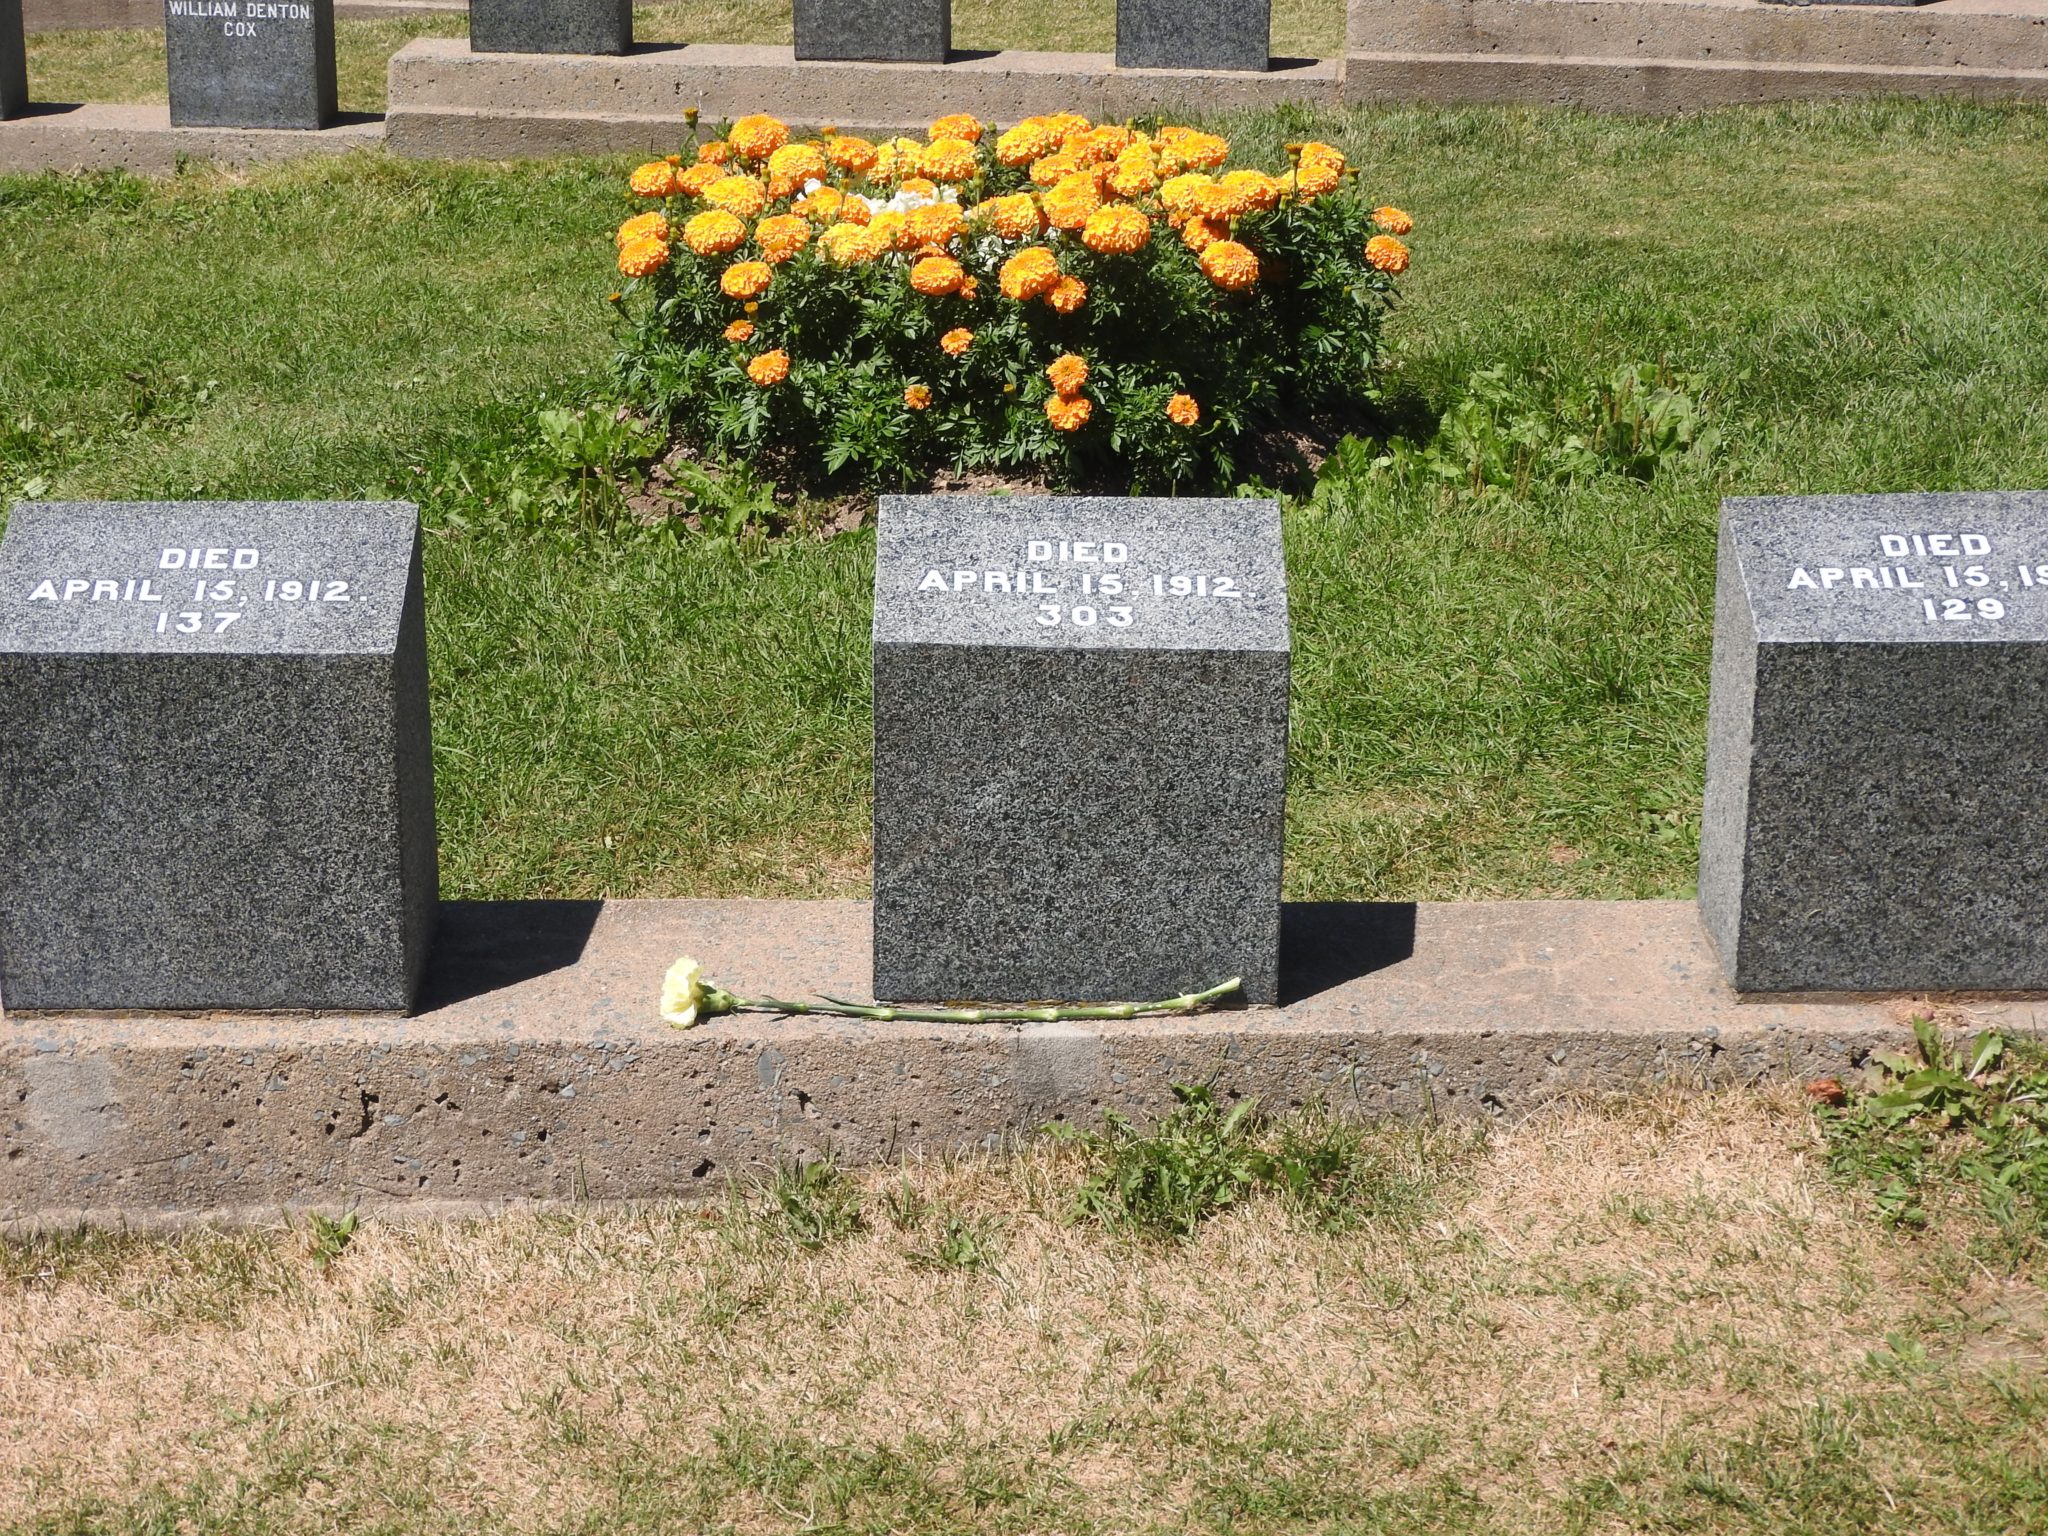 Three granite headstones